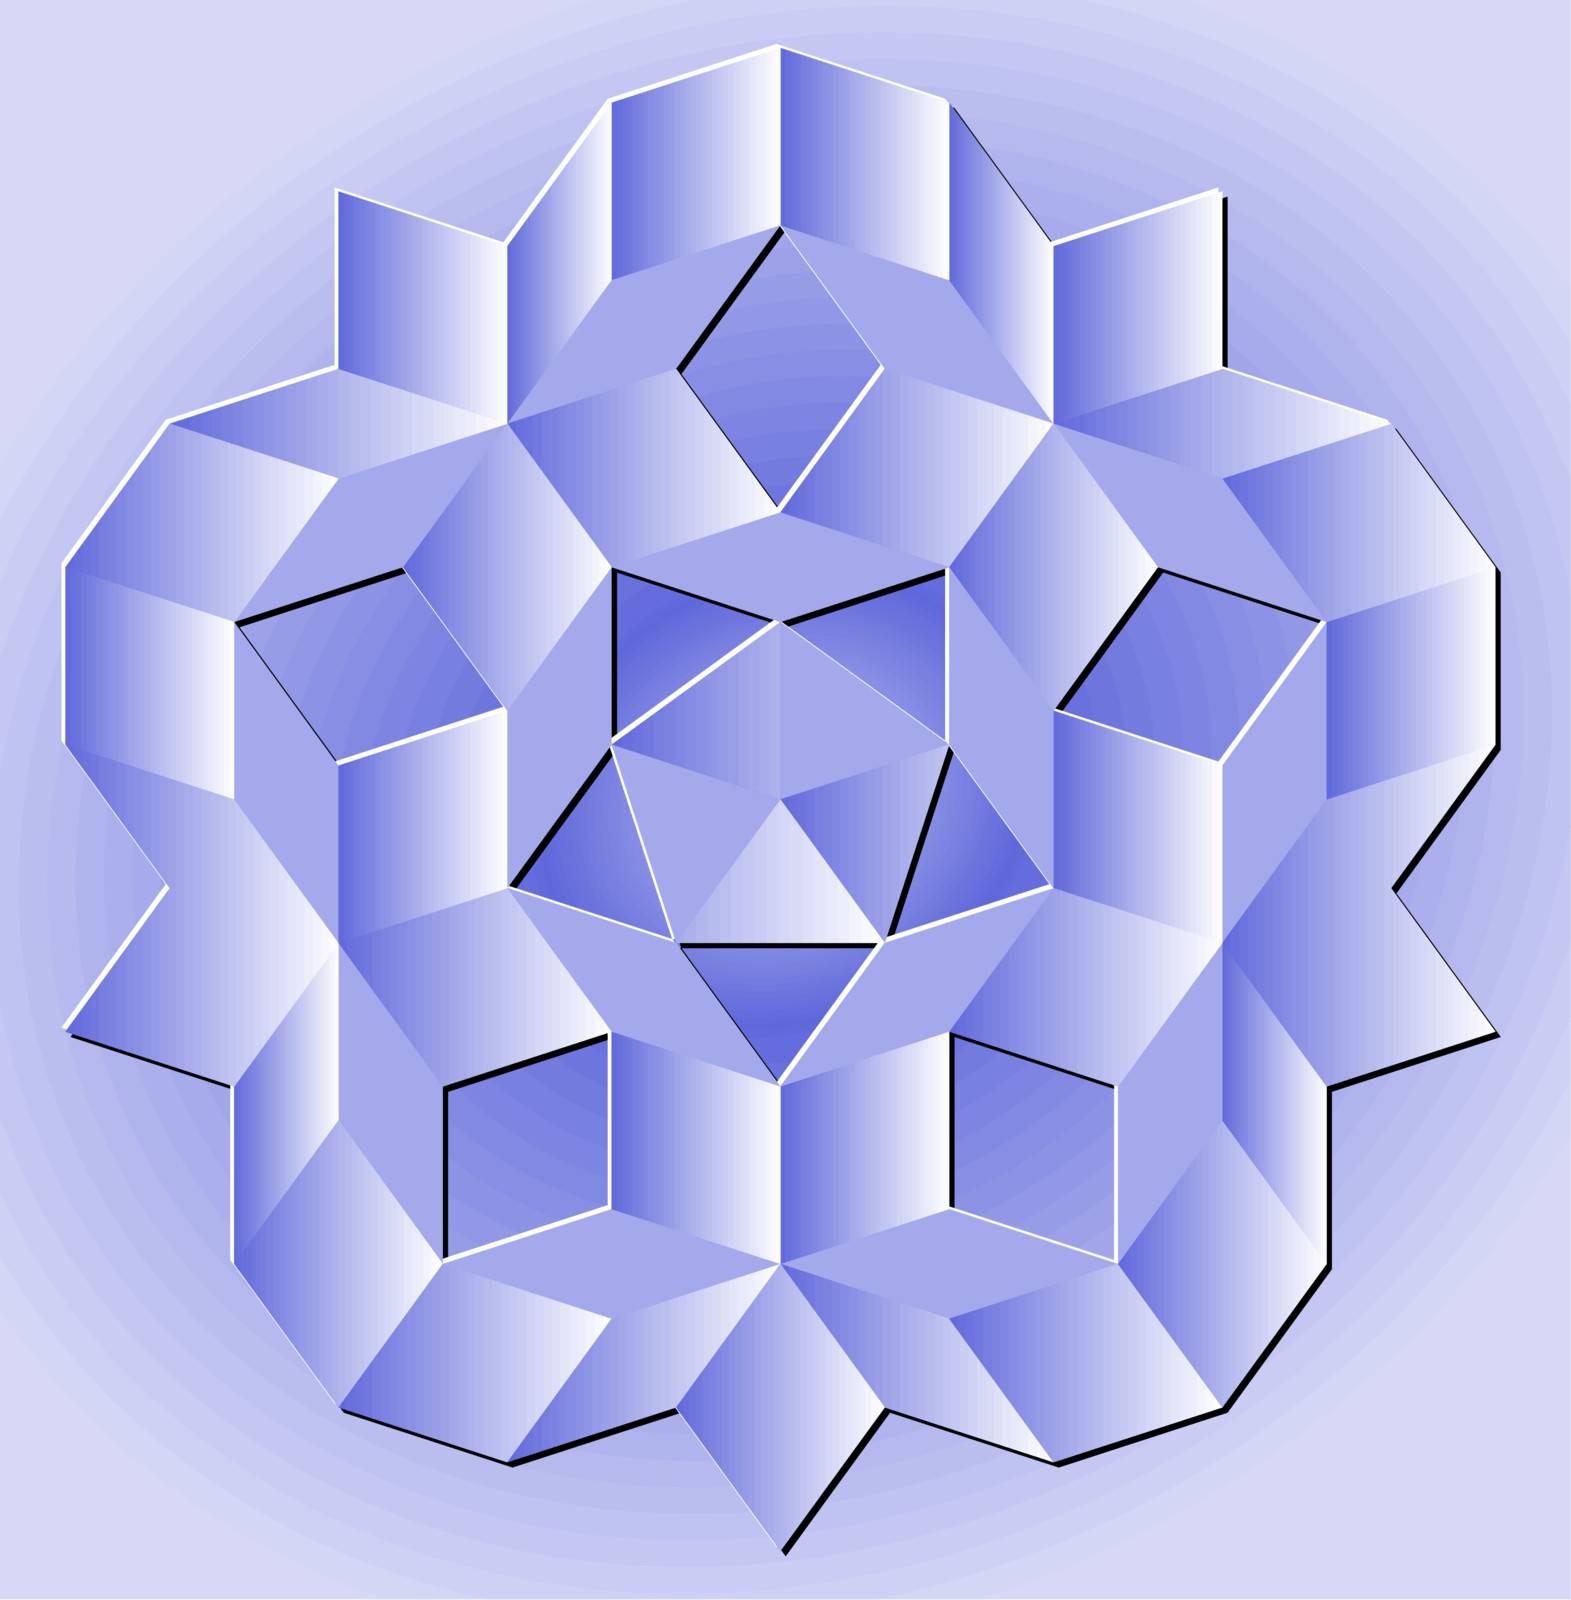 Blue Penrose tiling by screenexa